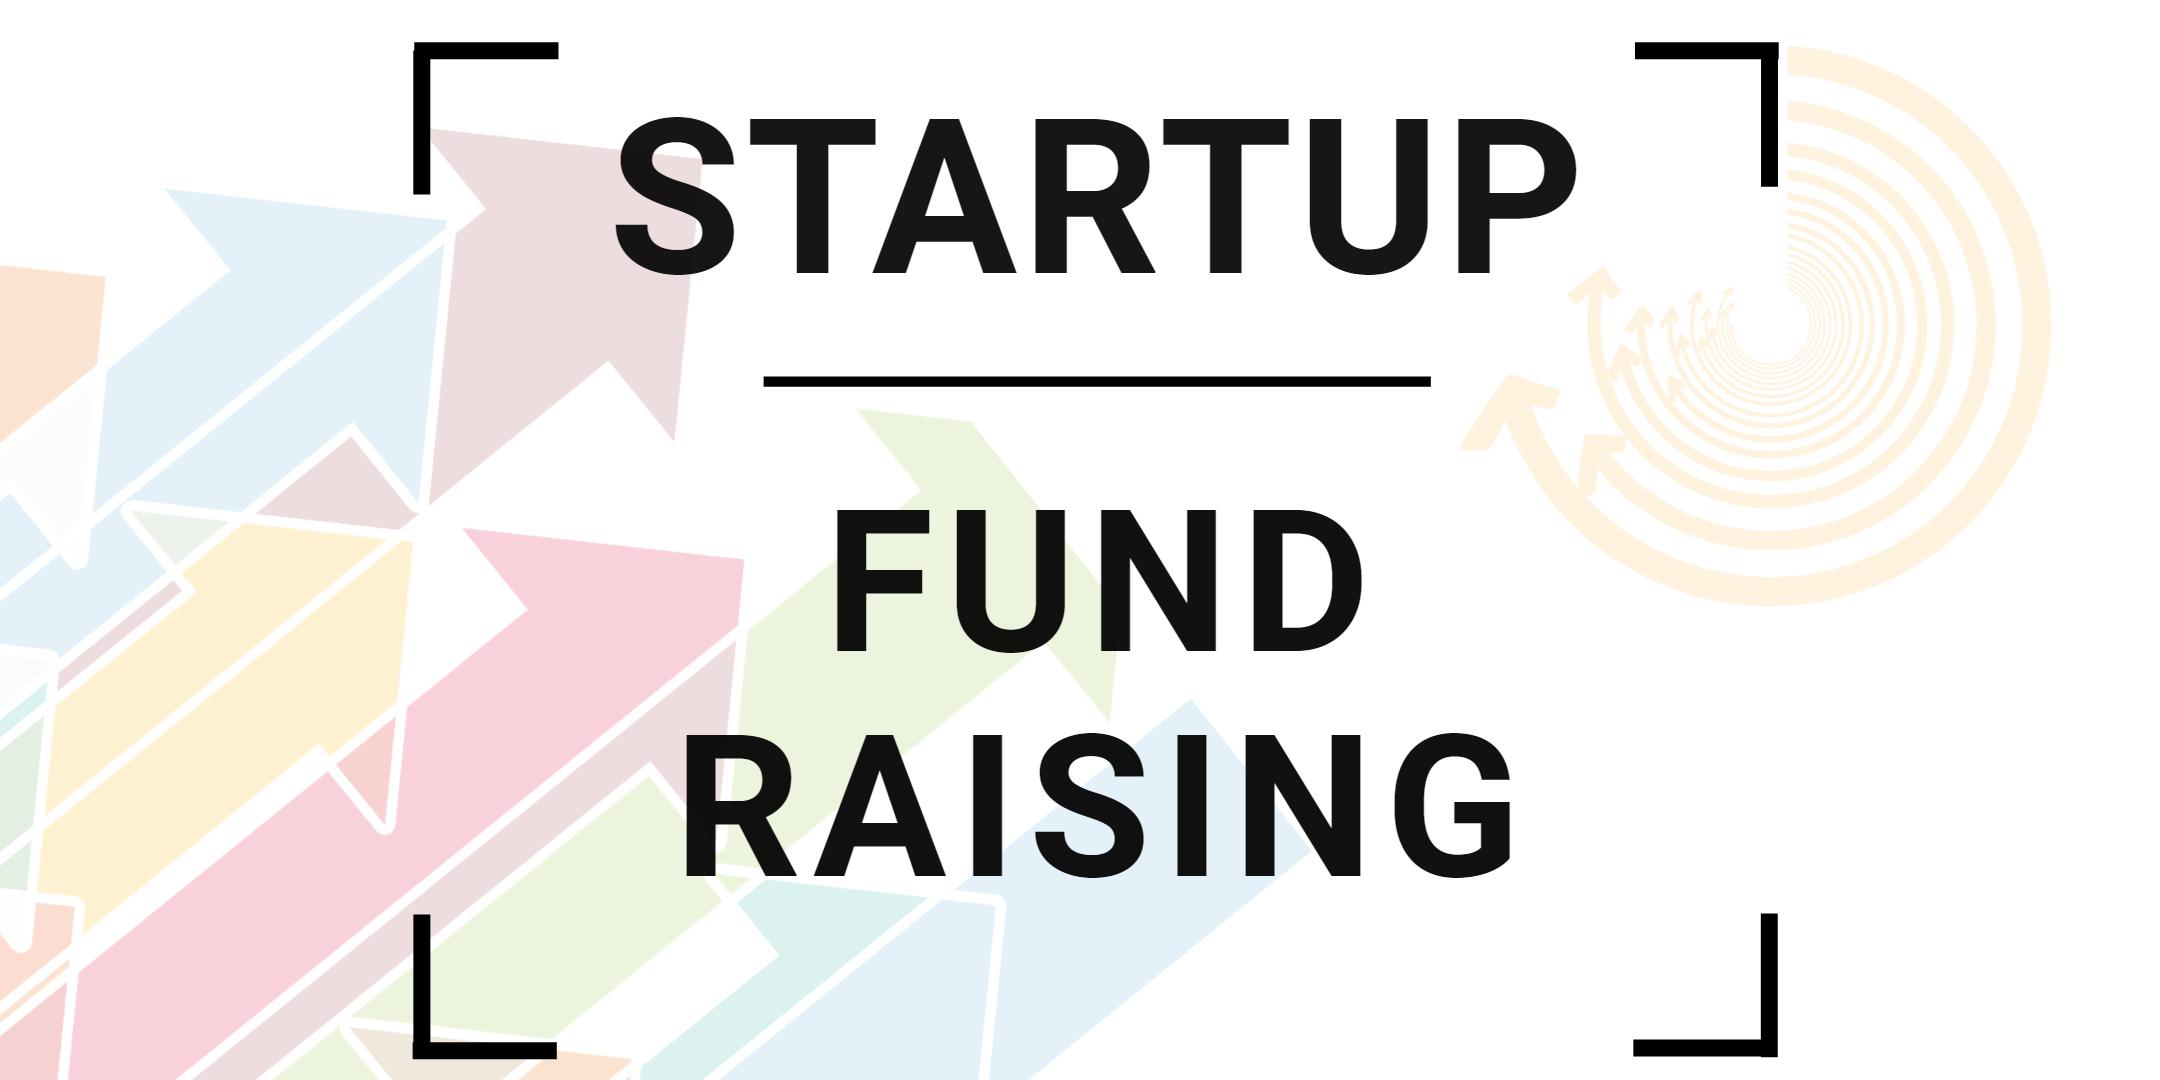 Fund Raising - Startup Business